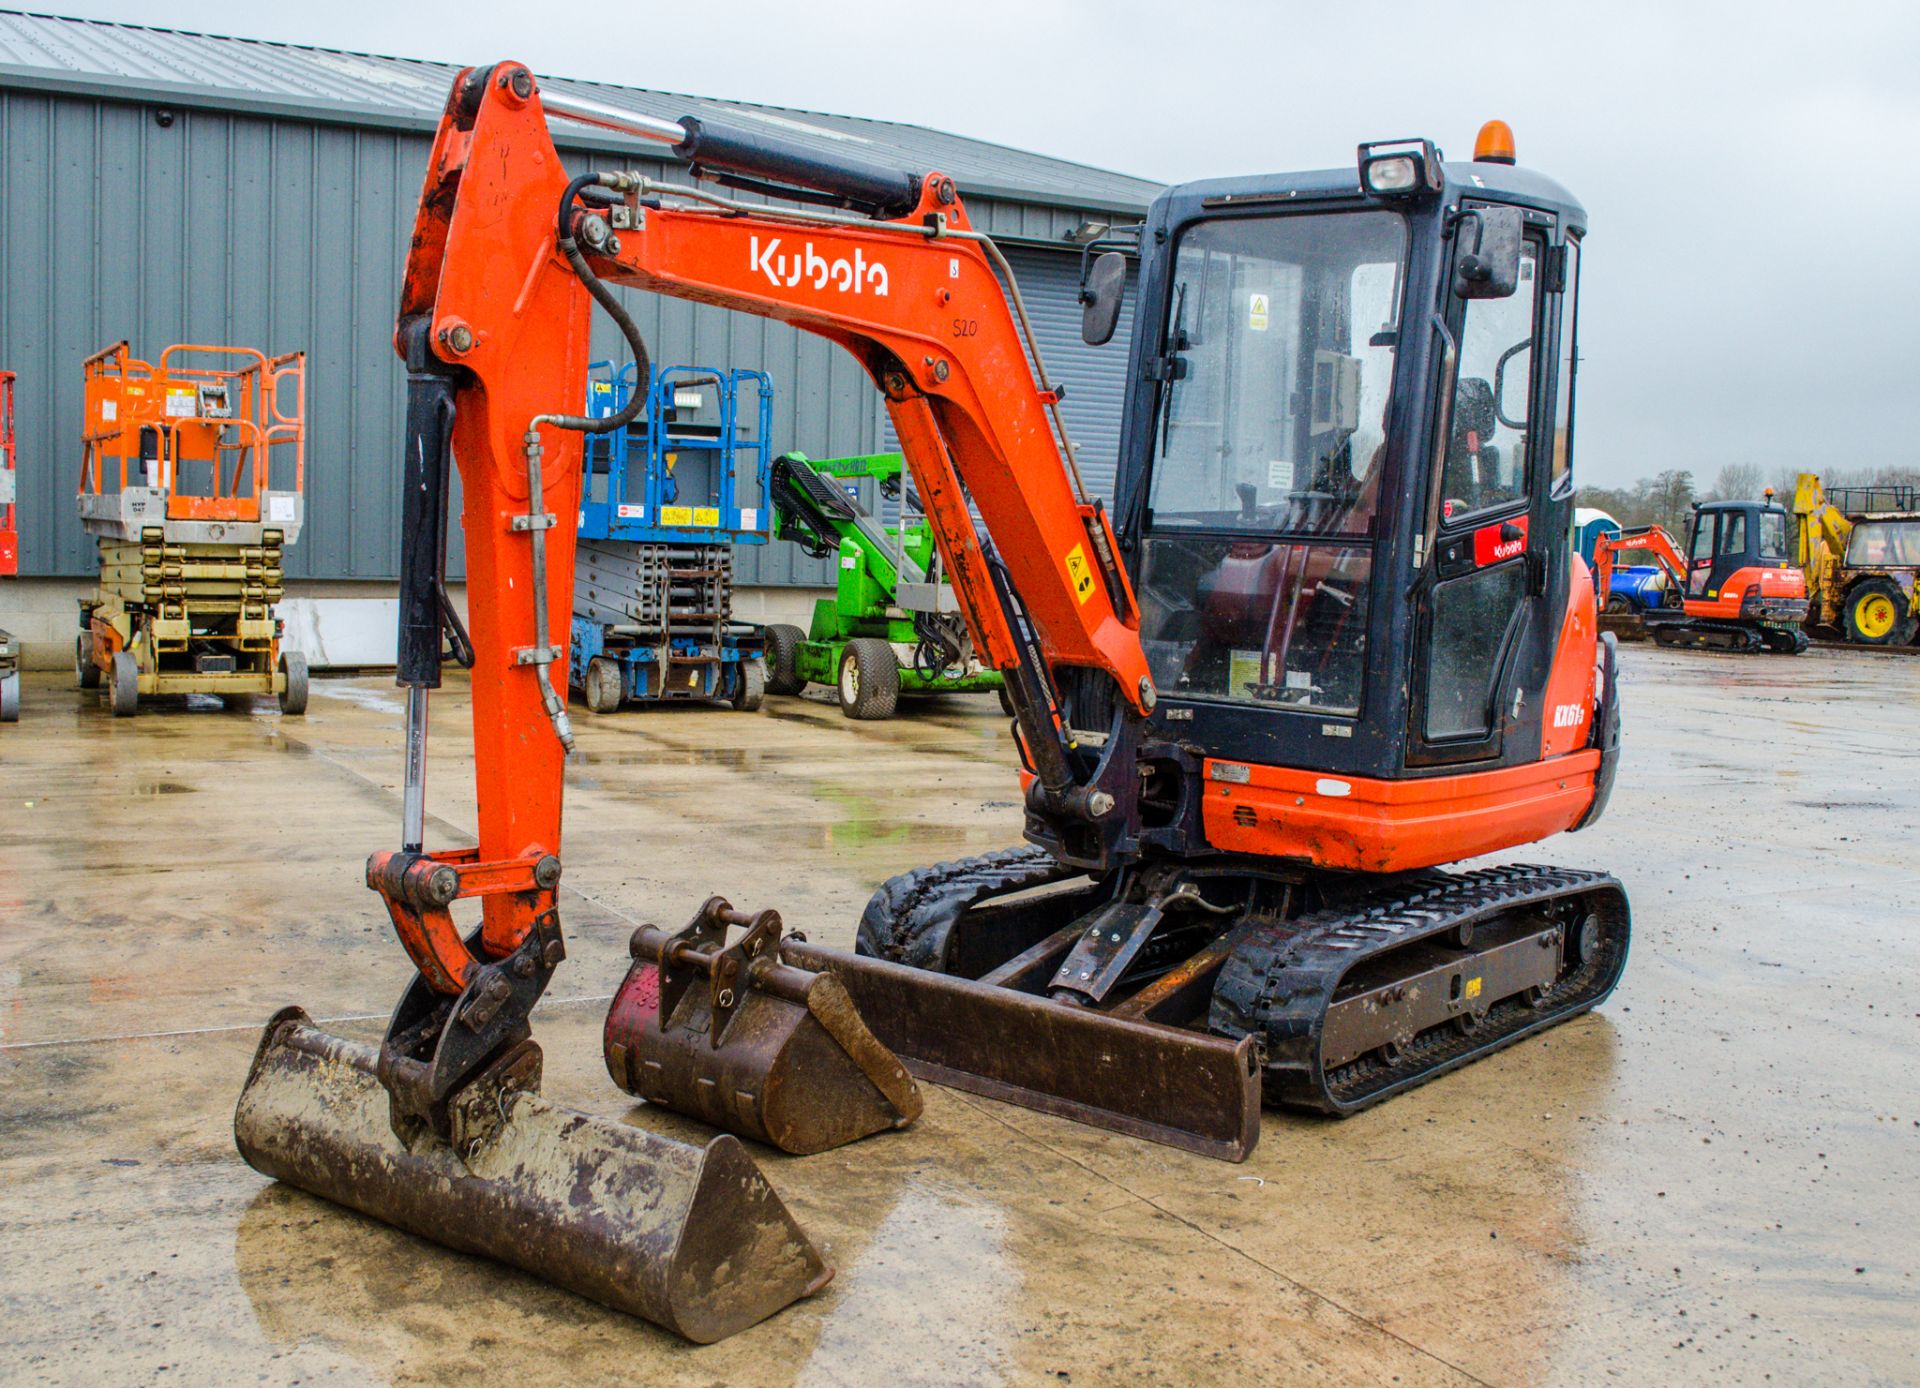 Kubota KX61-3 2.6 tonne rubber tracked mini excavator Year: 2015 S/N: 81541 Recorded Hours: 3107